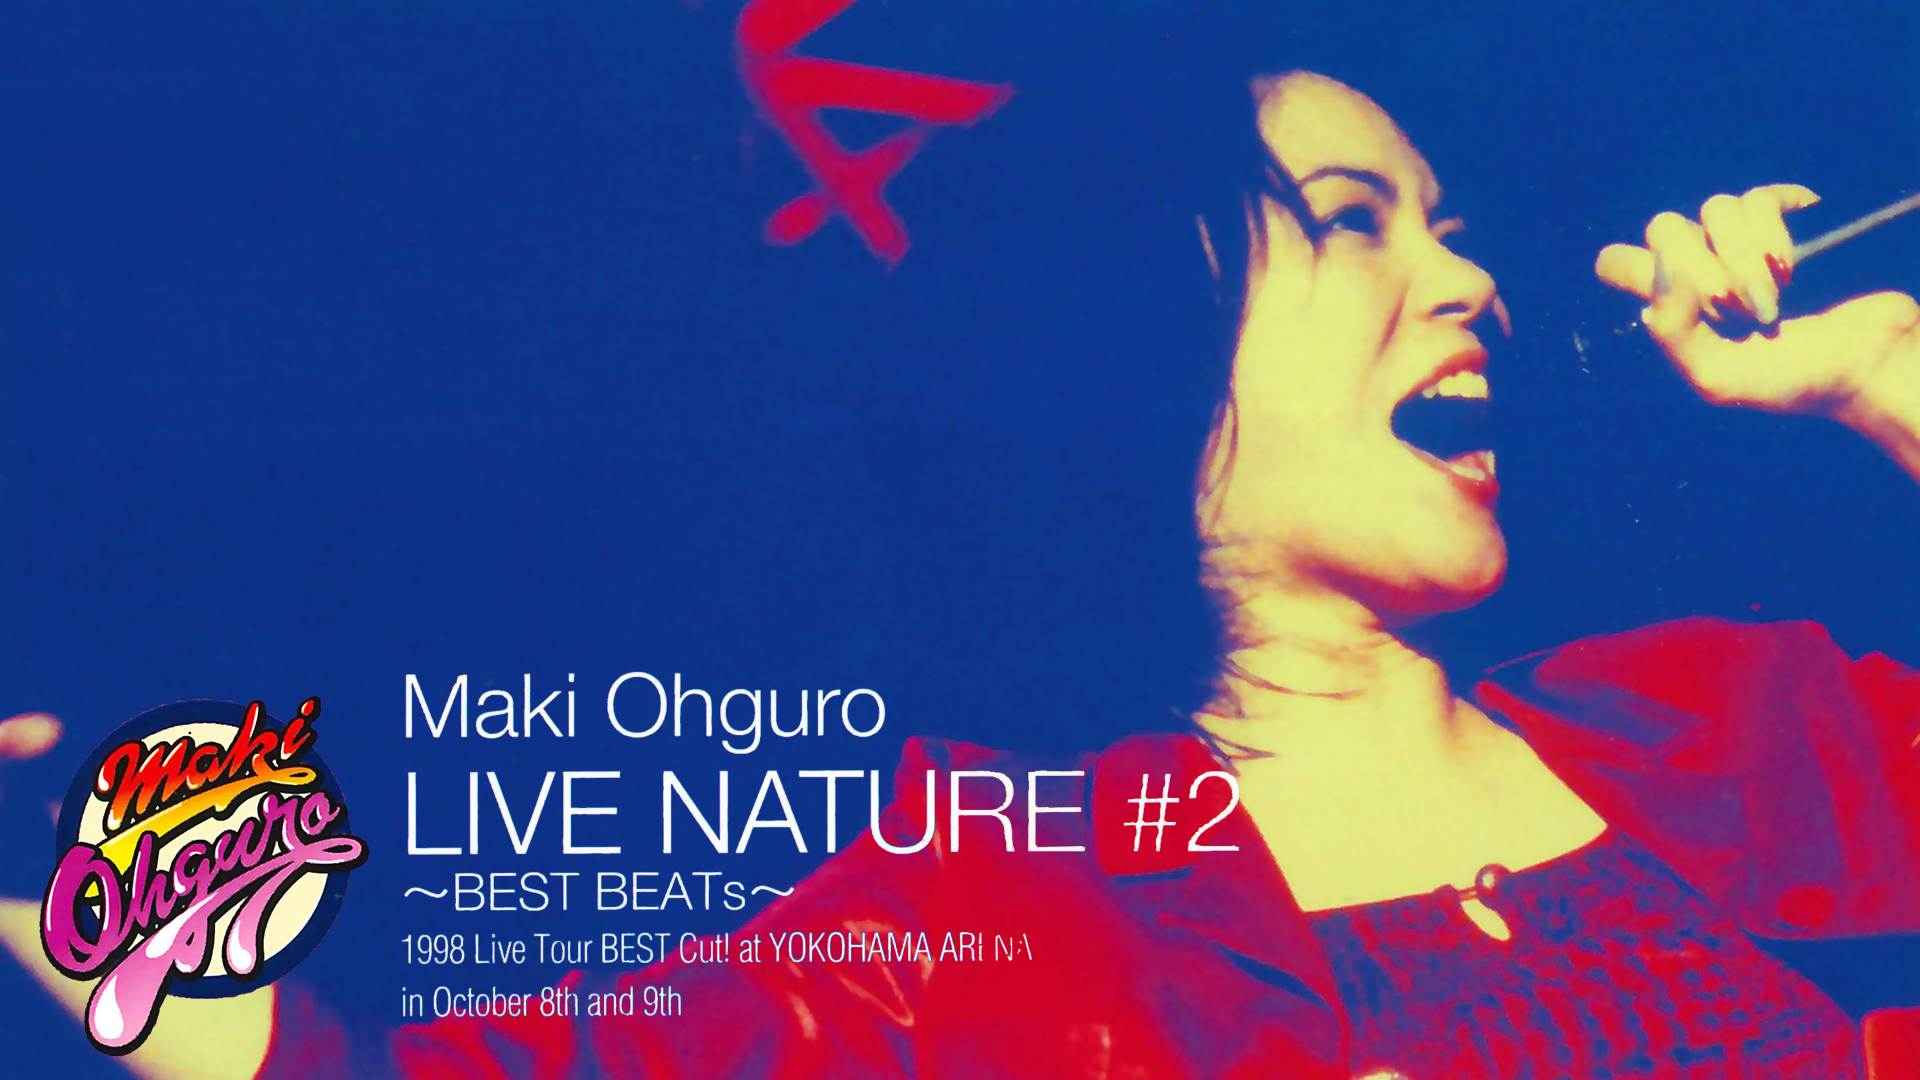 大黒摩季 LIVE NATURE #2 BEST BEATS(音楽・ライブ / 2001) - 動画配信 